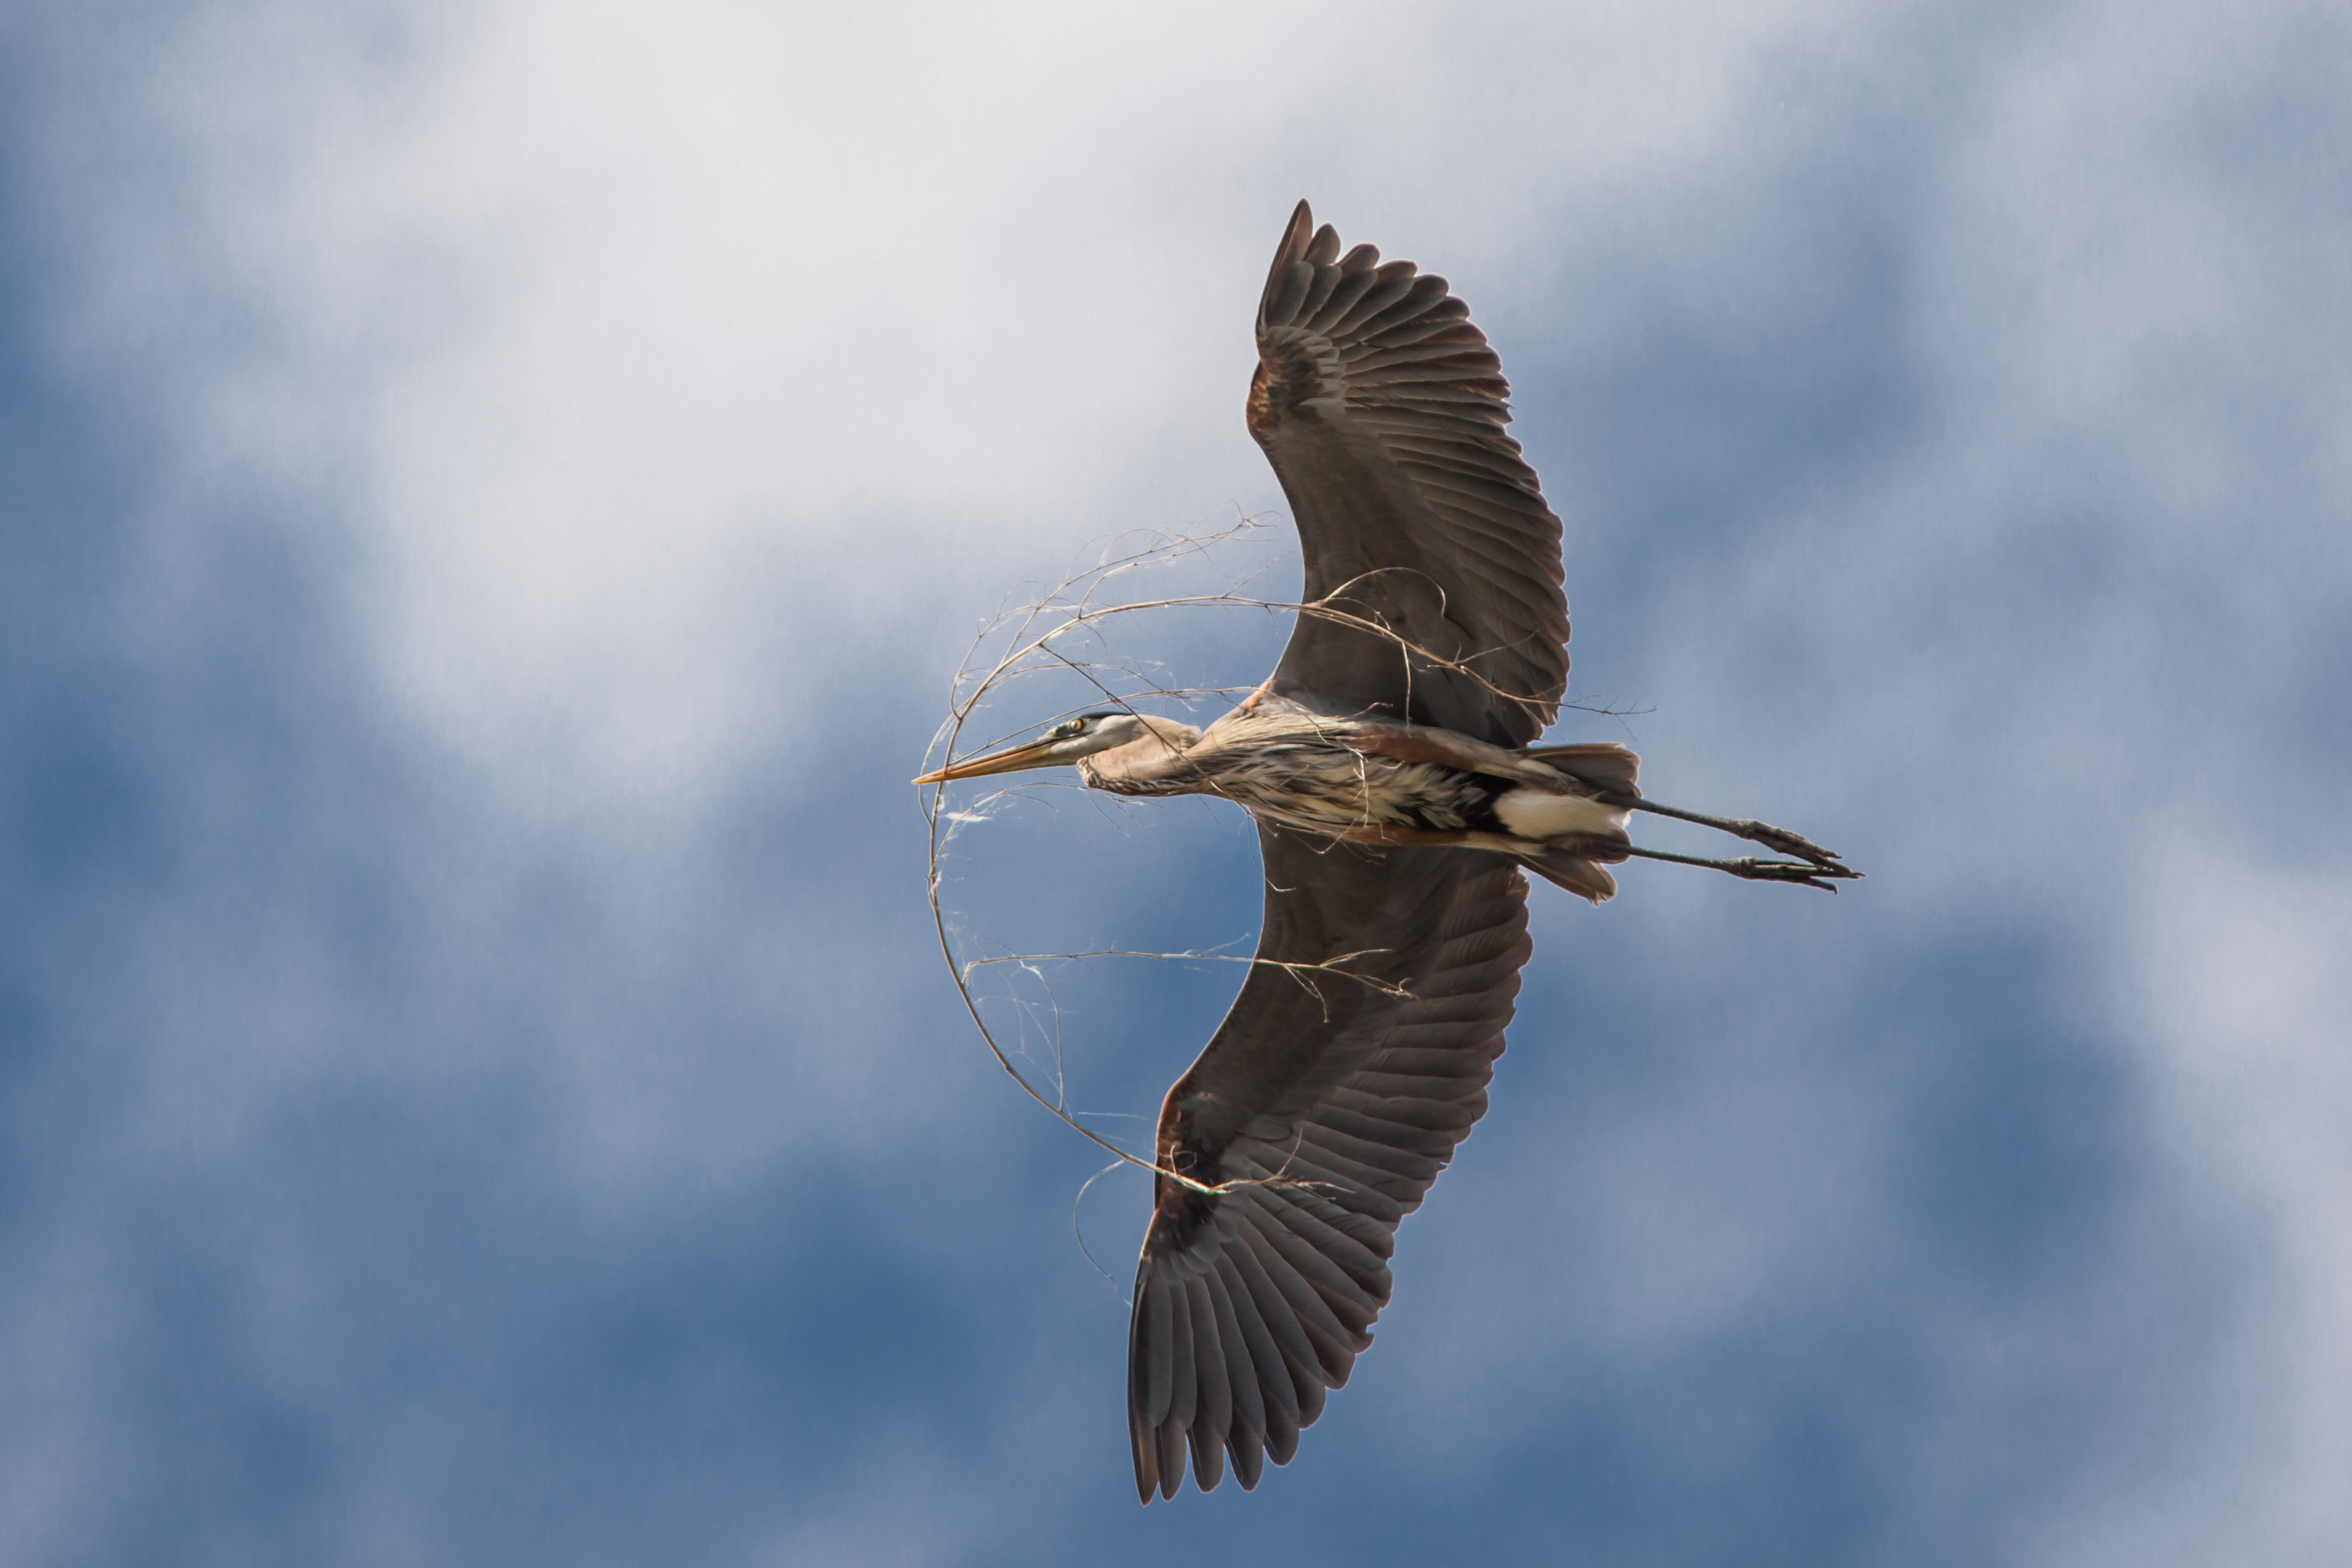 A large, long-necked, long-legged bird flies overhead carrying a branch.